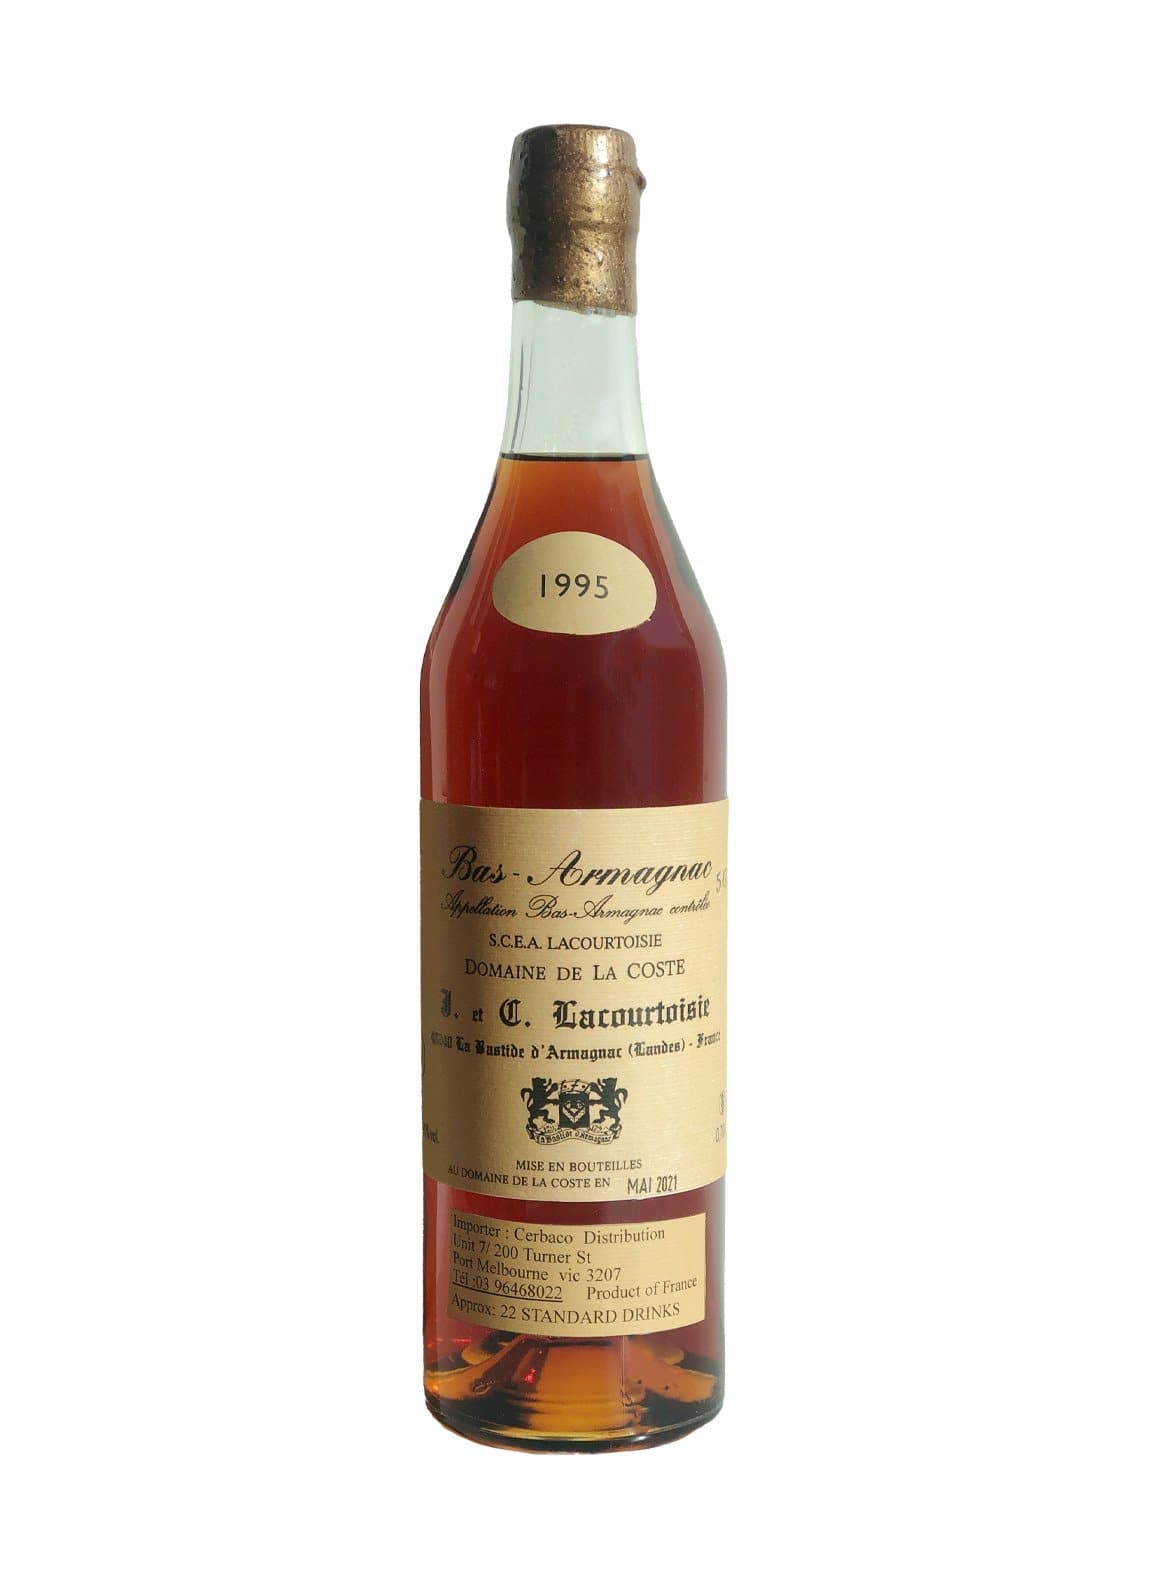 Domaine Lacourtoisie 1995 Grand Bas Armagnac 41% 700ml | Brandy | Shop online at Spirits of France